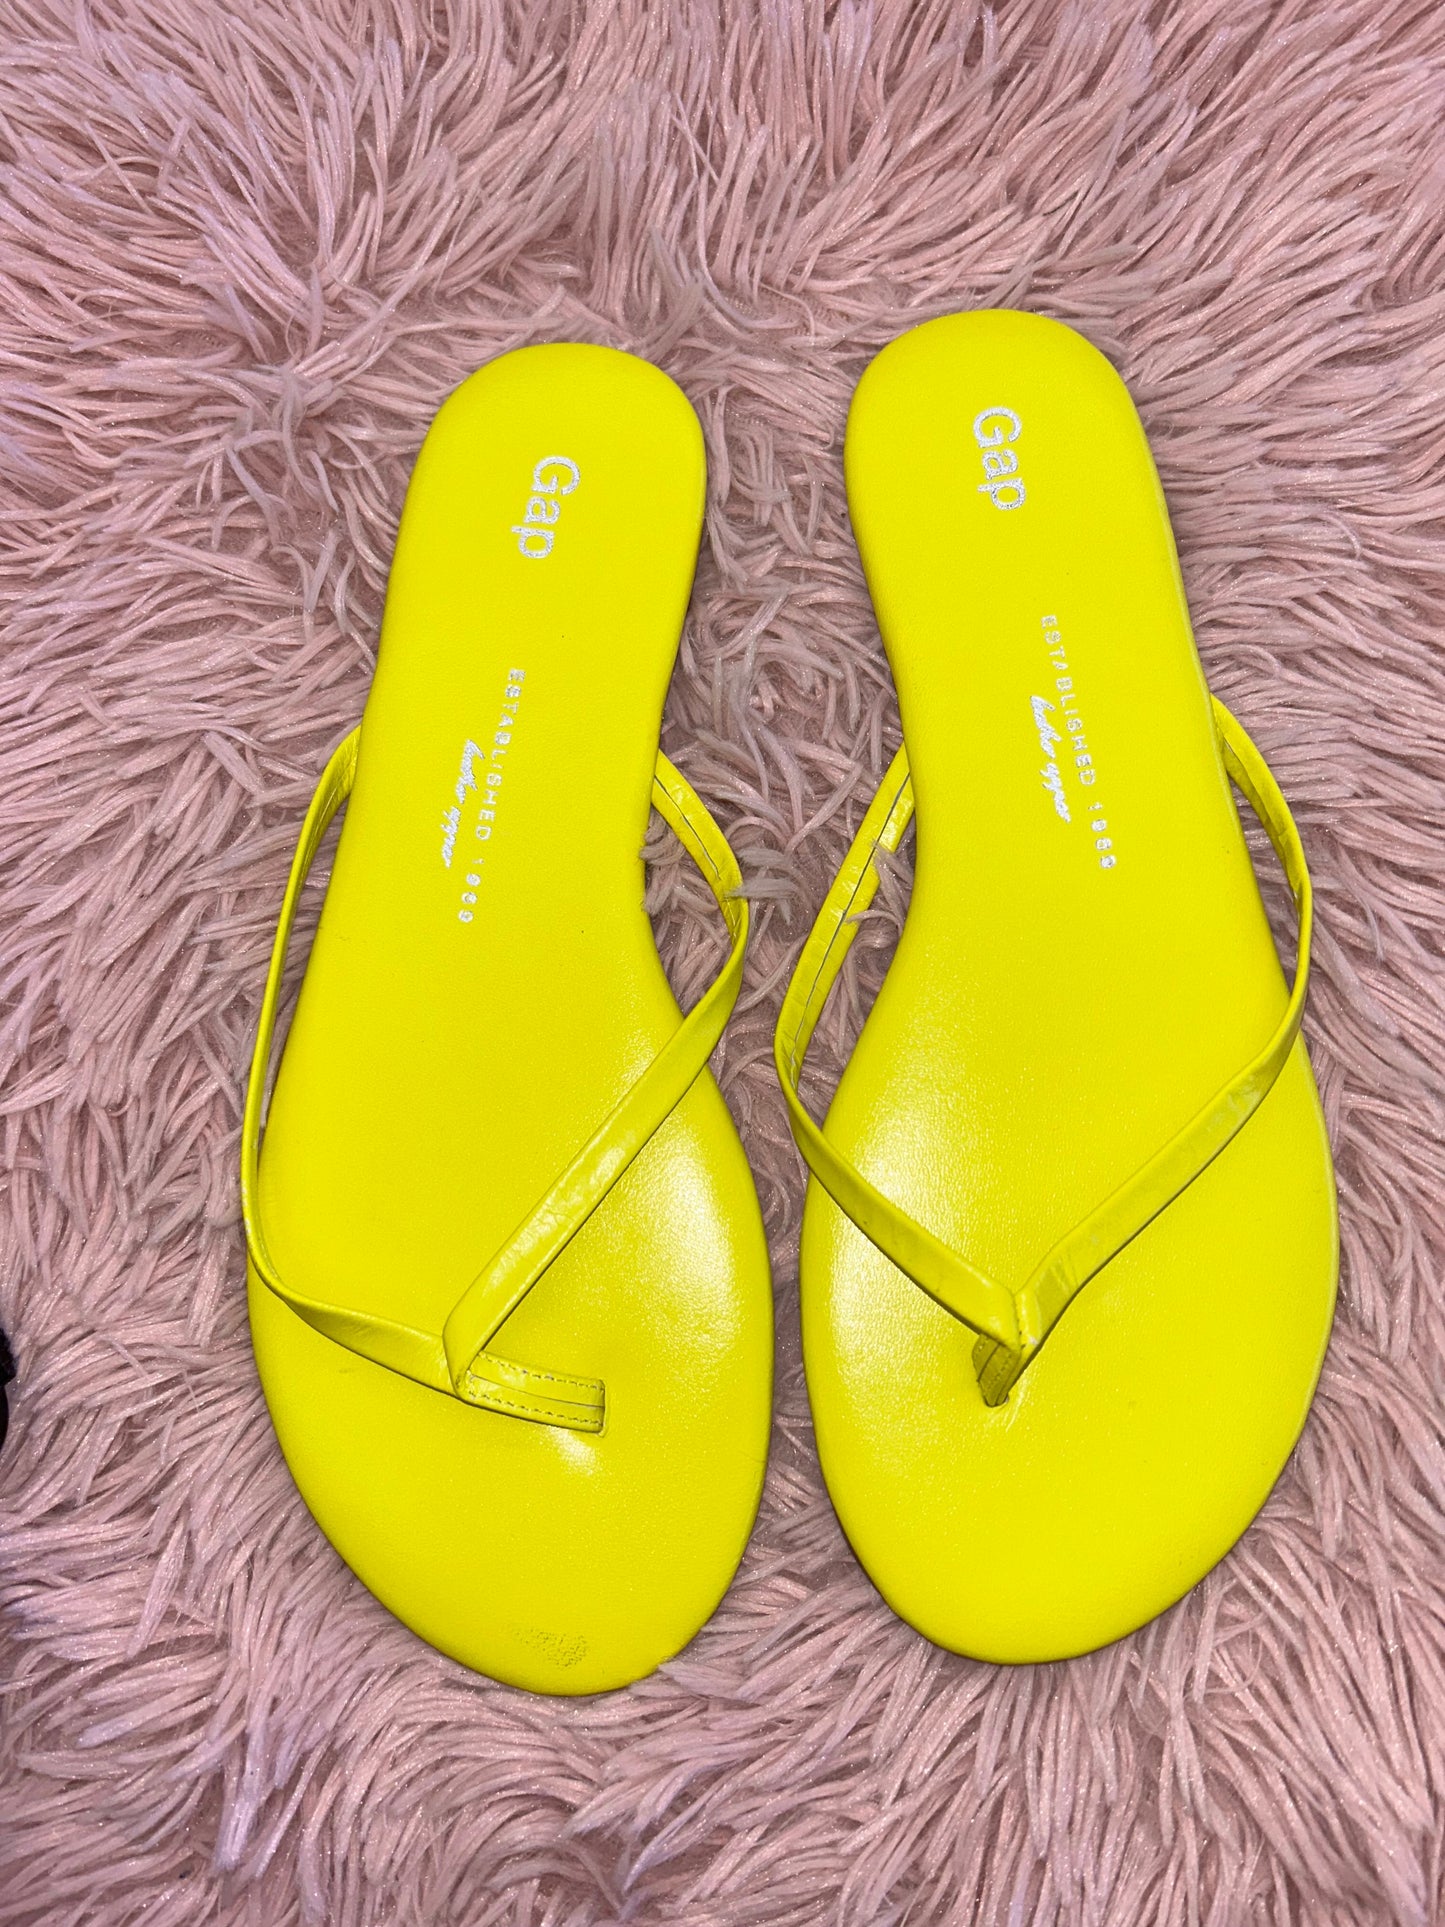 Yellow Sandals Flip Flops Gap, Size 8